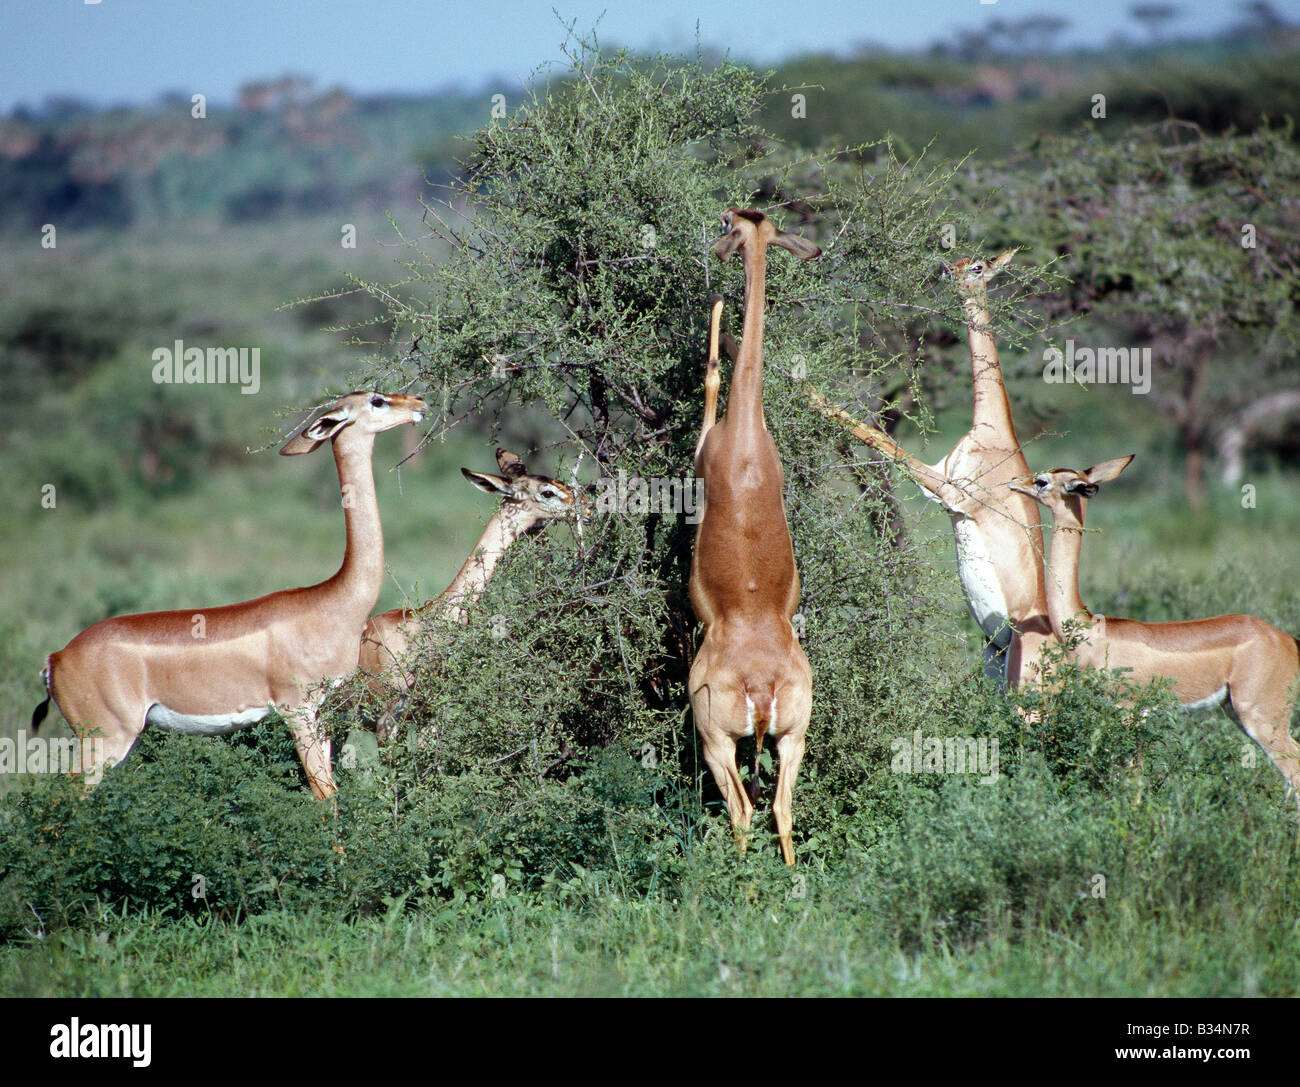 Kenya, Samburu, Samburu National Reserve. Un groupe d'gerenuk (un nom dérivé de la langue somalienne qui signifie 'girafe Banque D'Images